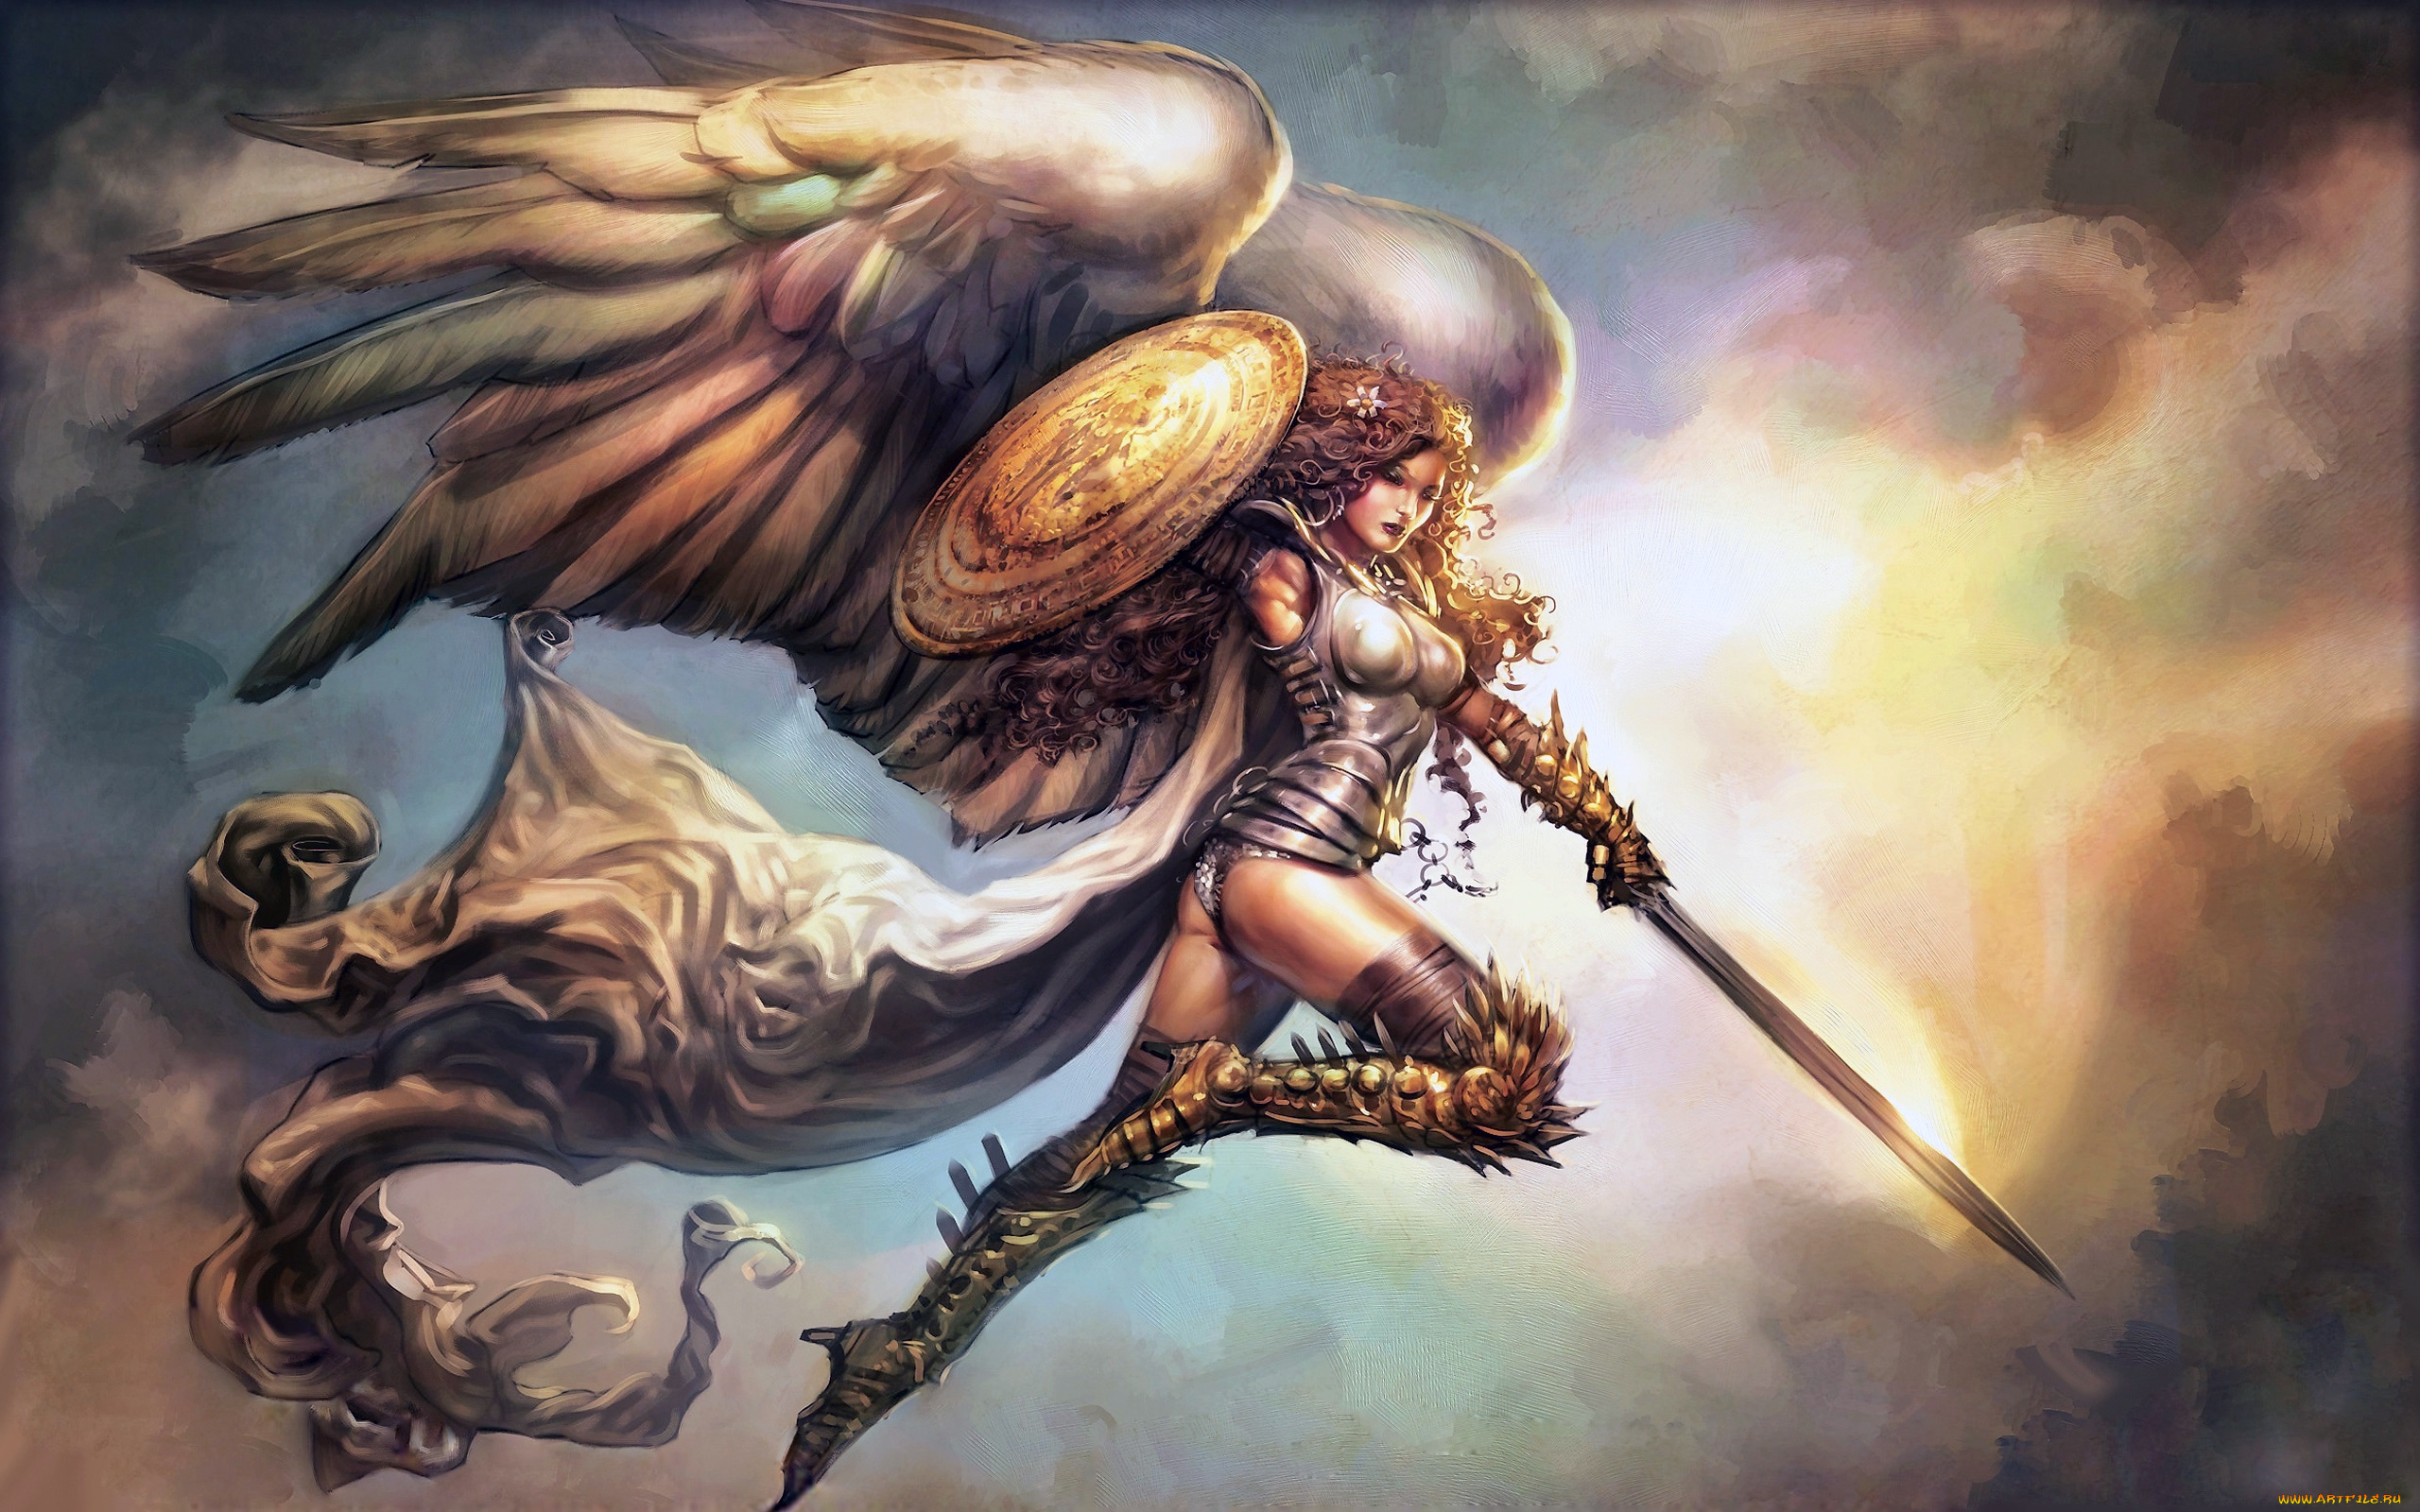 фэнтези, ангелы, girl, cape, artwork, armor, fantasy, curly, hair, shield, wings, sword, art, boots, angel